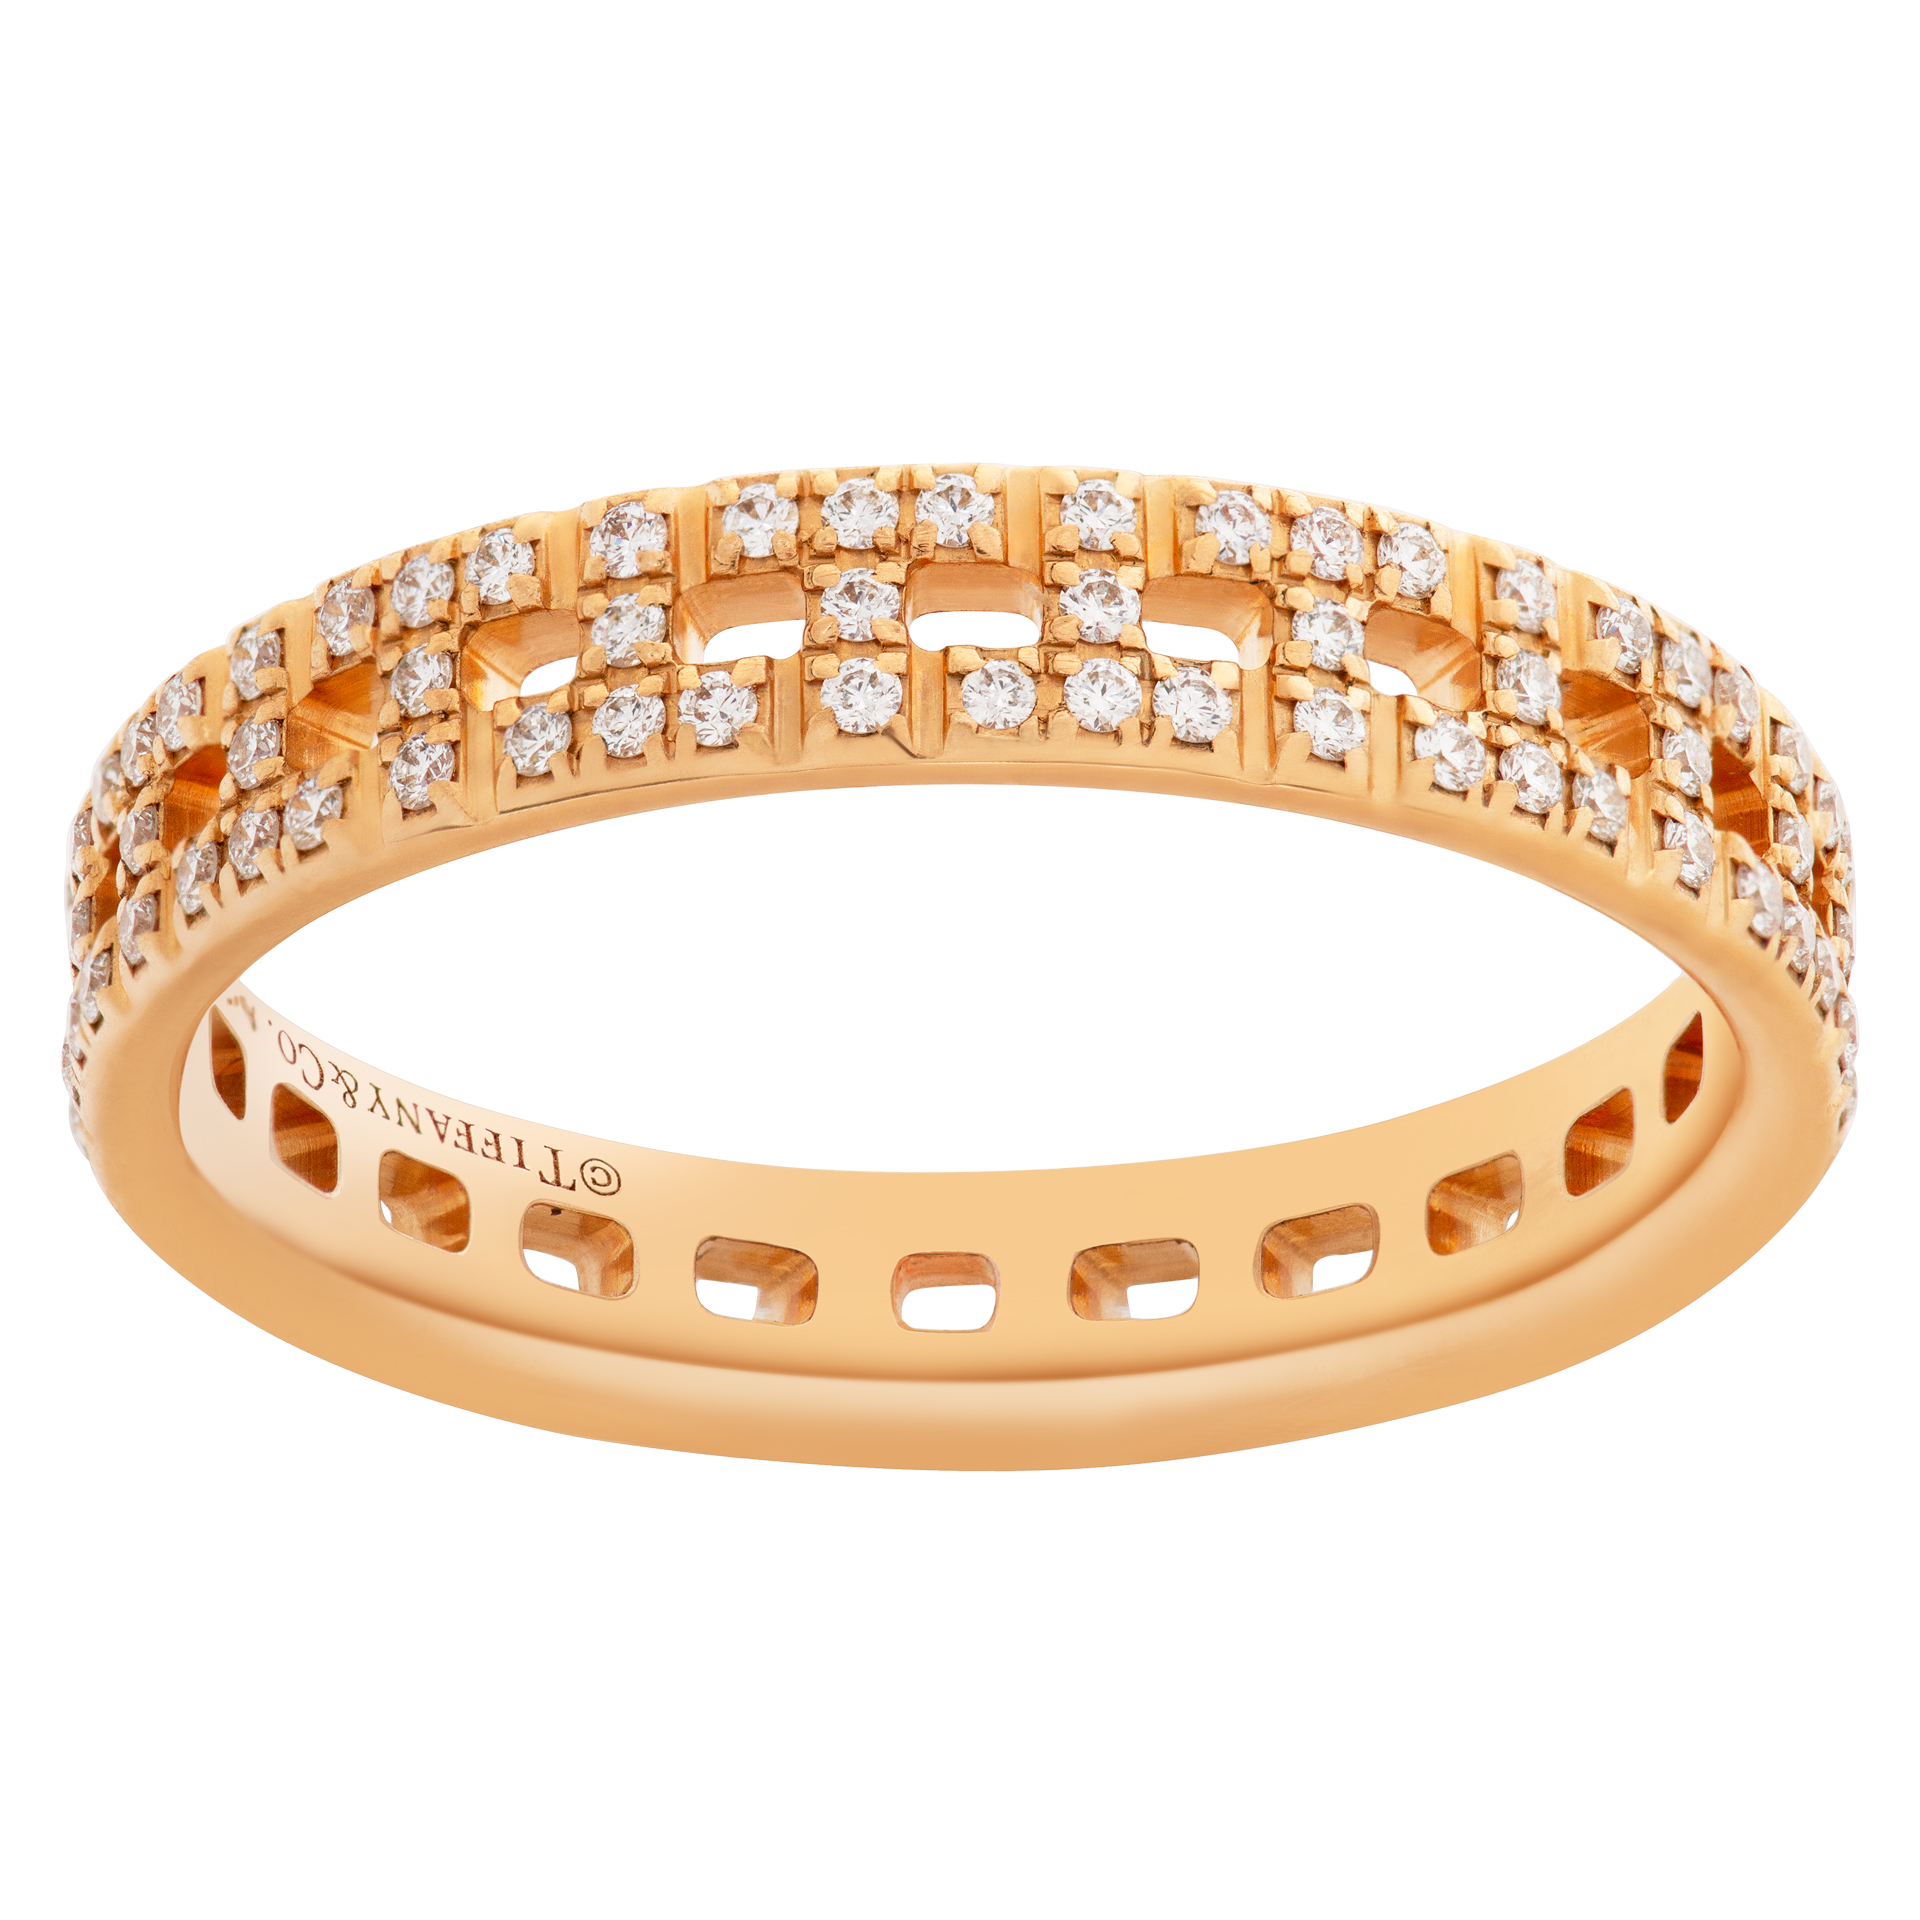 Tiffany & Co. "True Narrow" diamond ring in 18k rose gold image 1